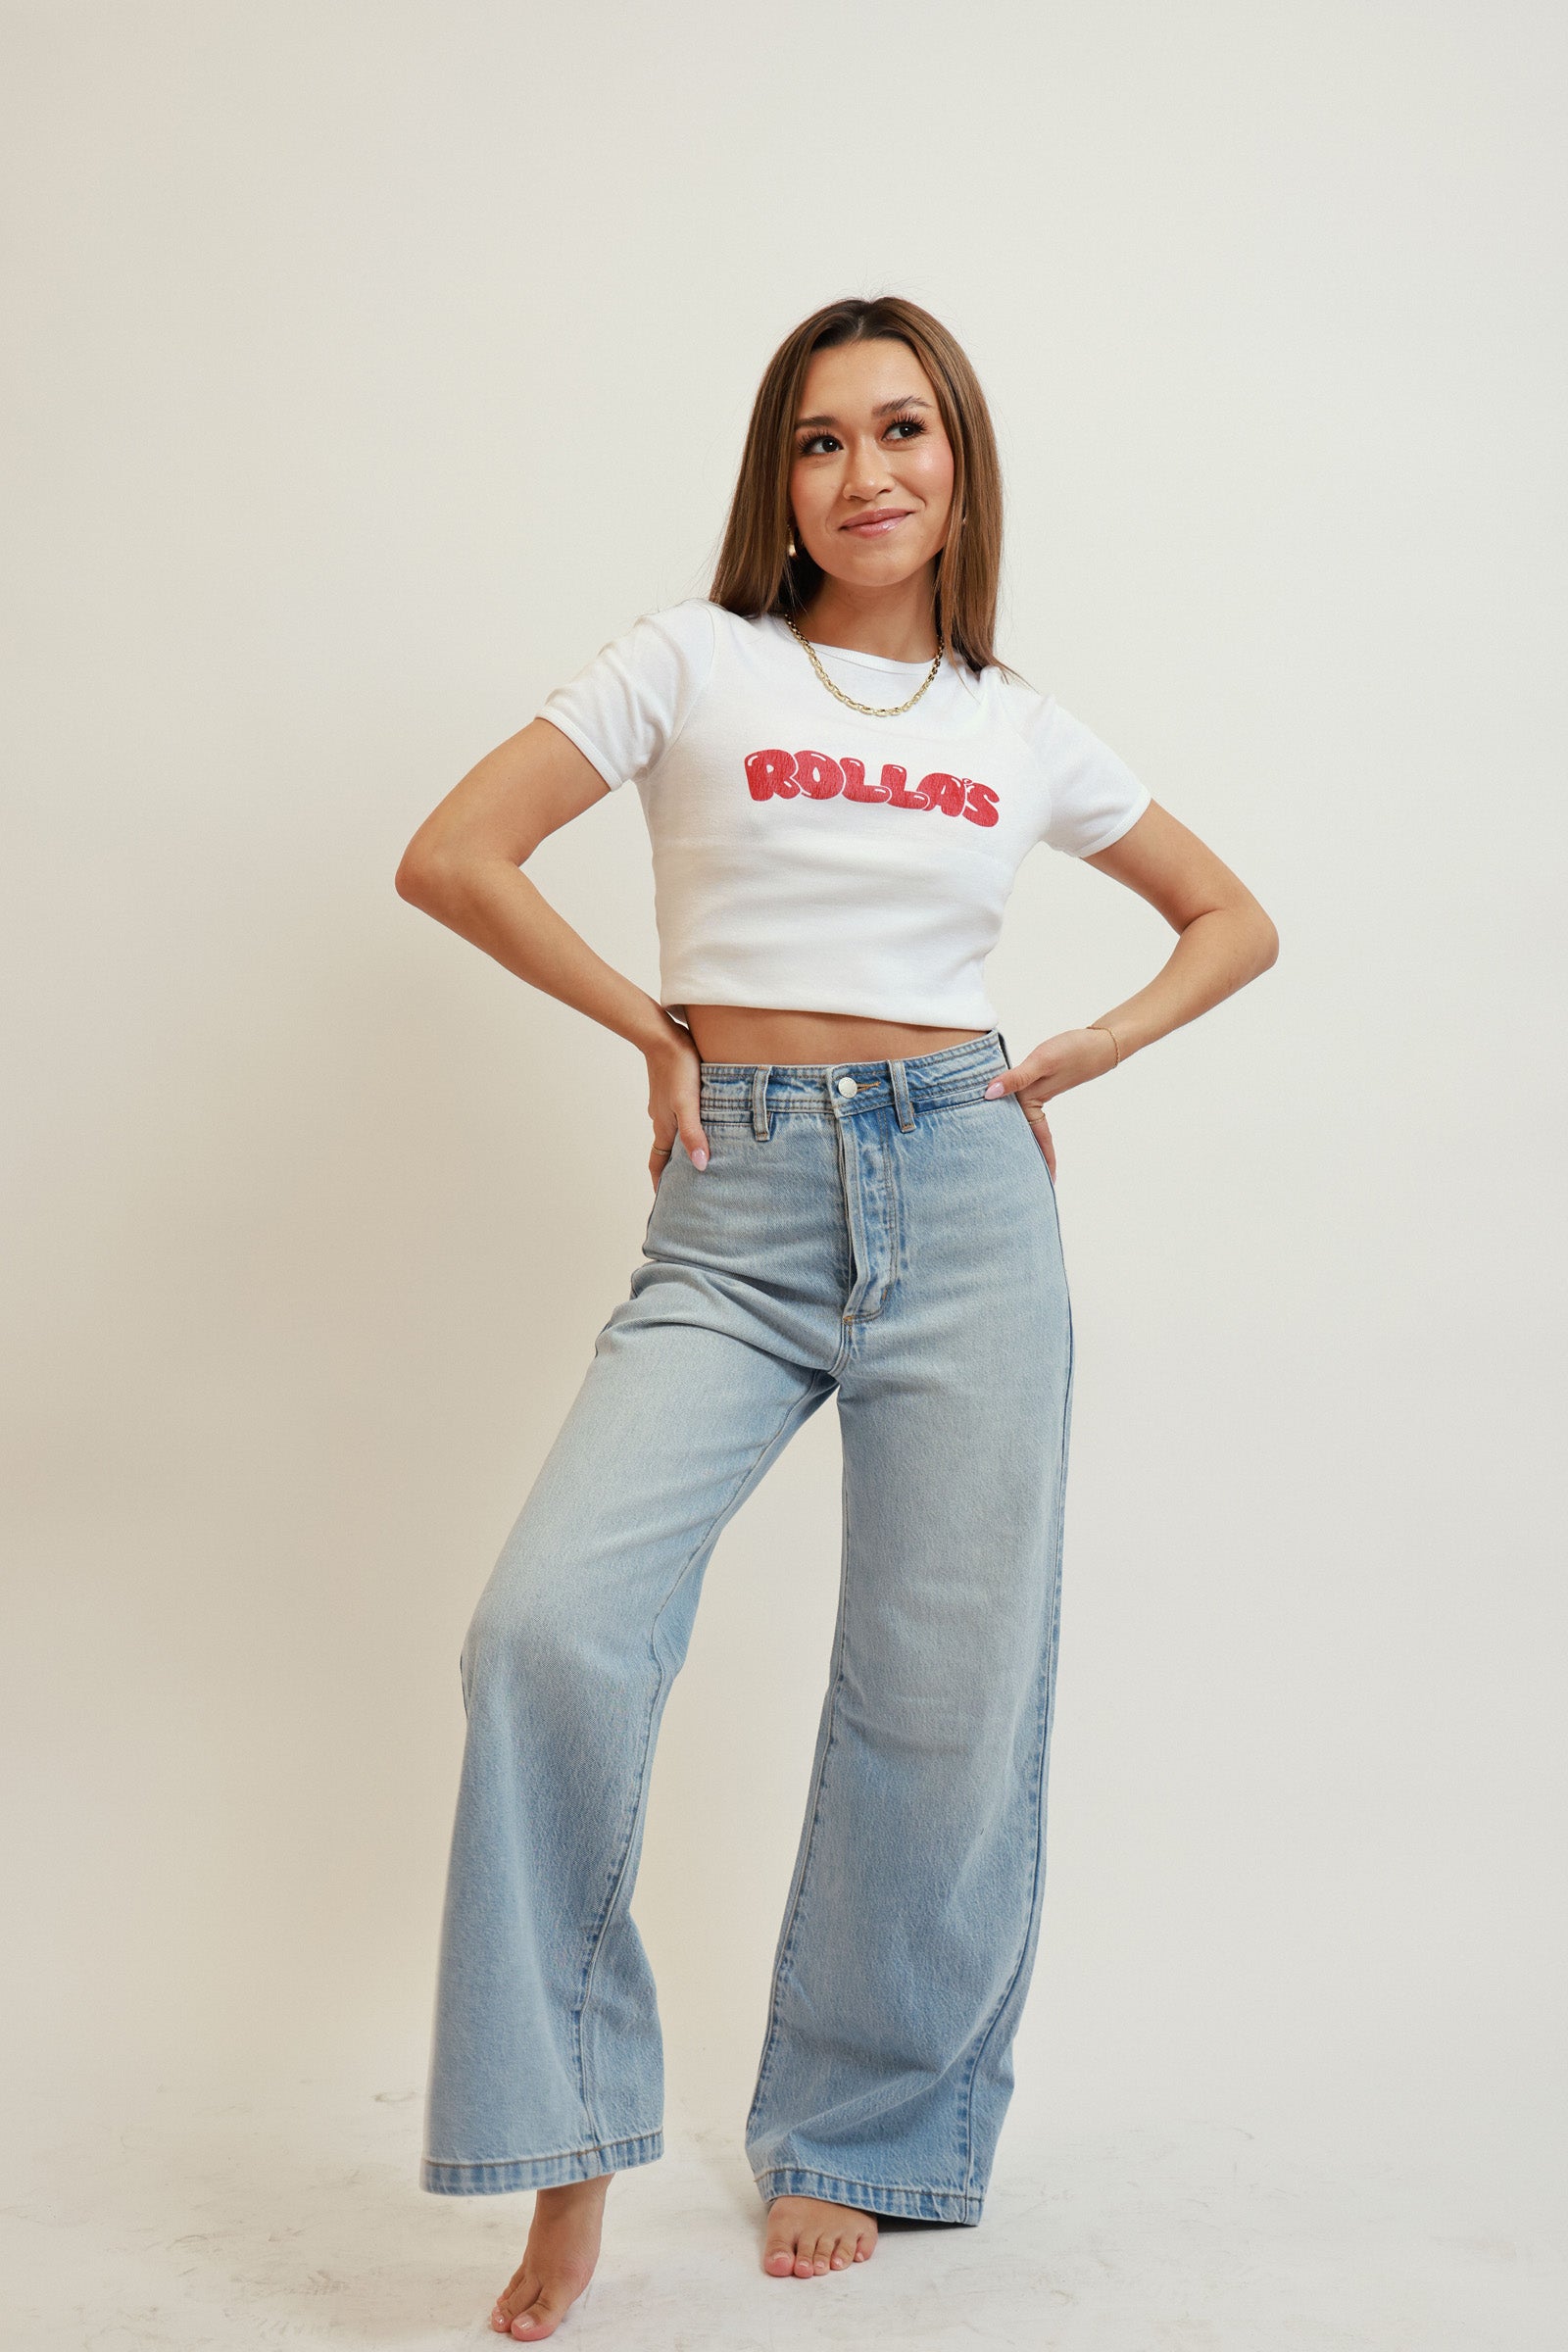 Rolla's Organic Sailor Jeans – Calico